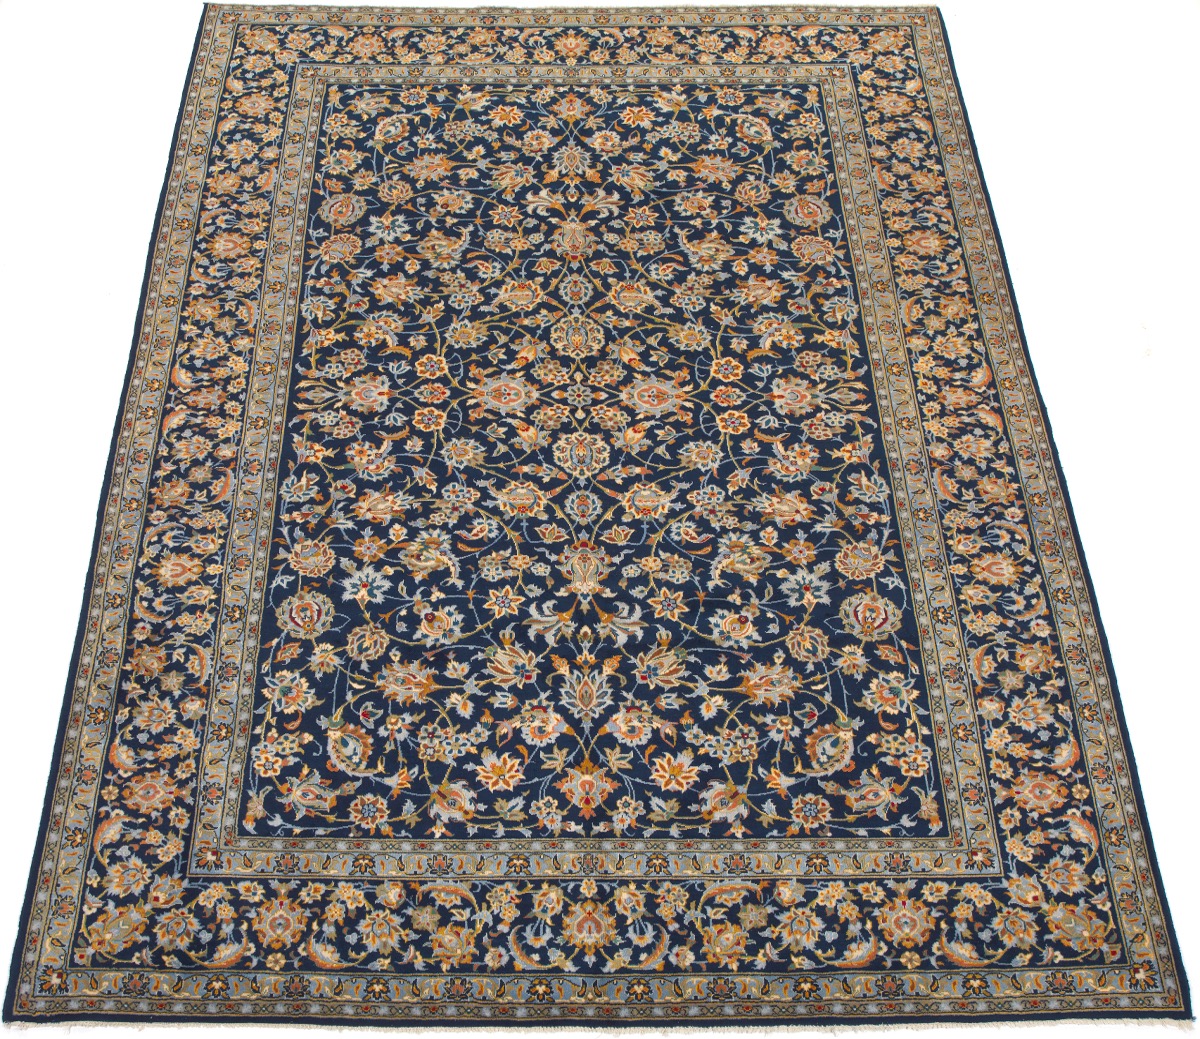 Blue Kashan Carpet, 20th Century, 10.29.16, Sold: $501.5